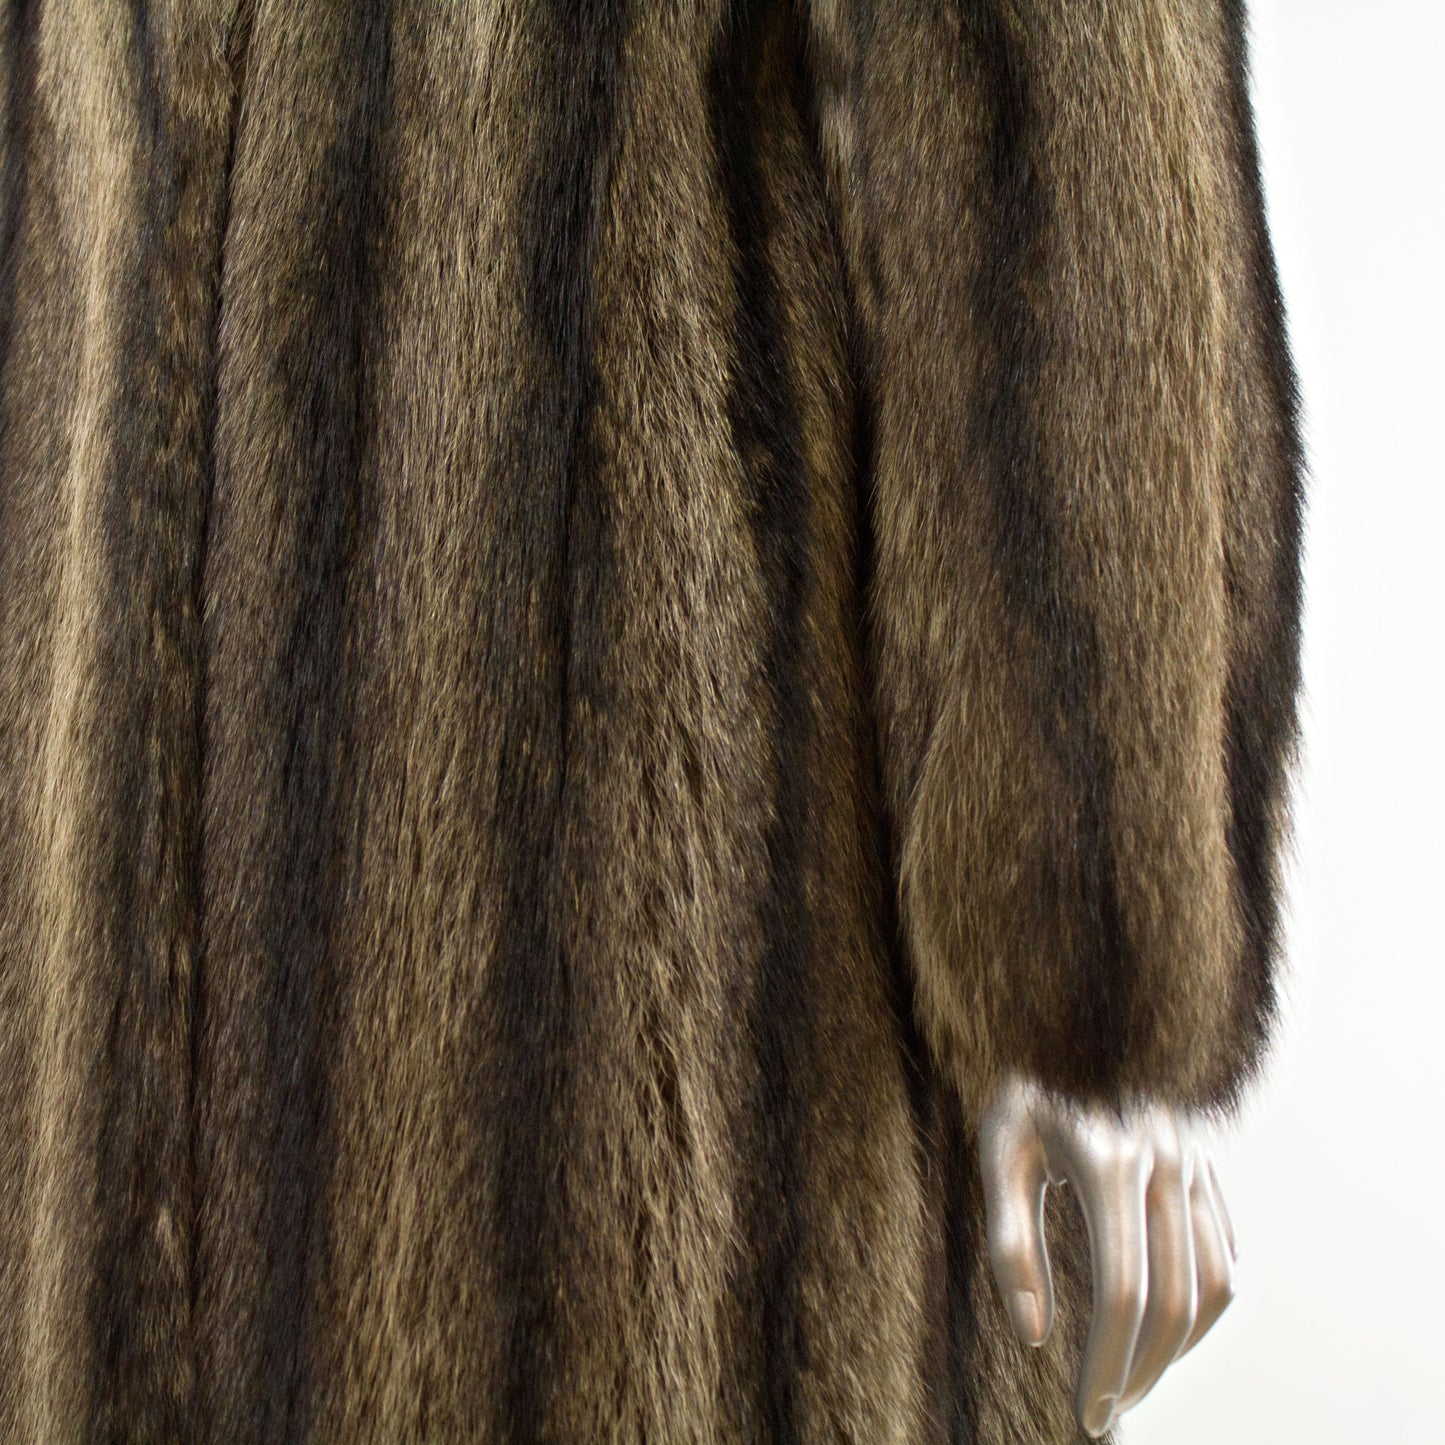 Full Length Raccoon Coat- Size M